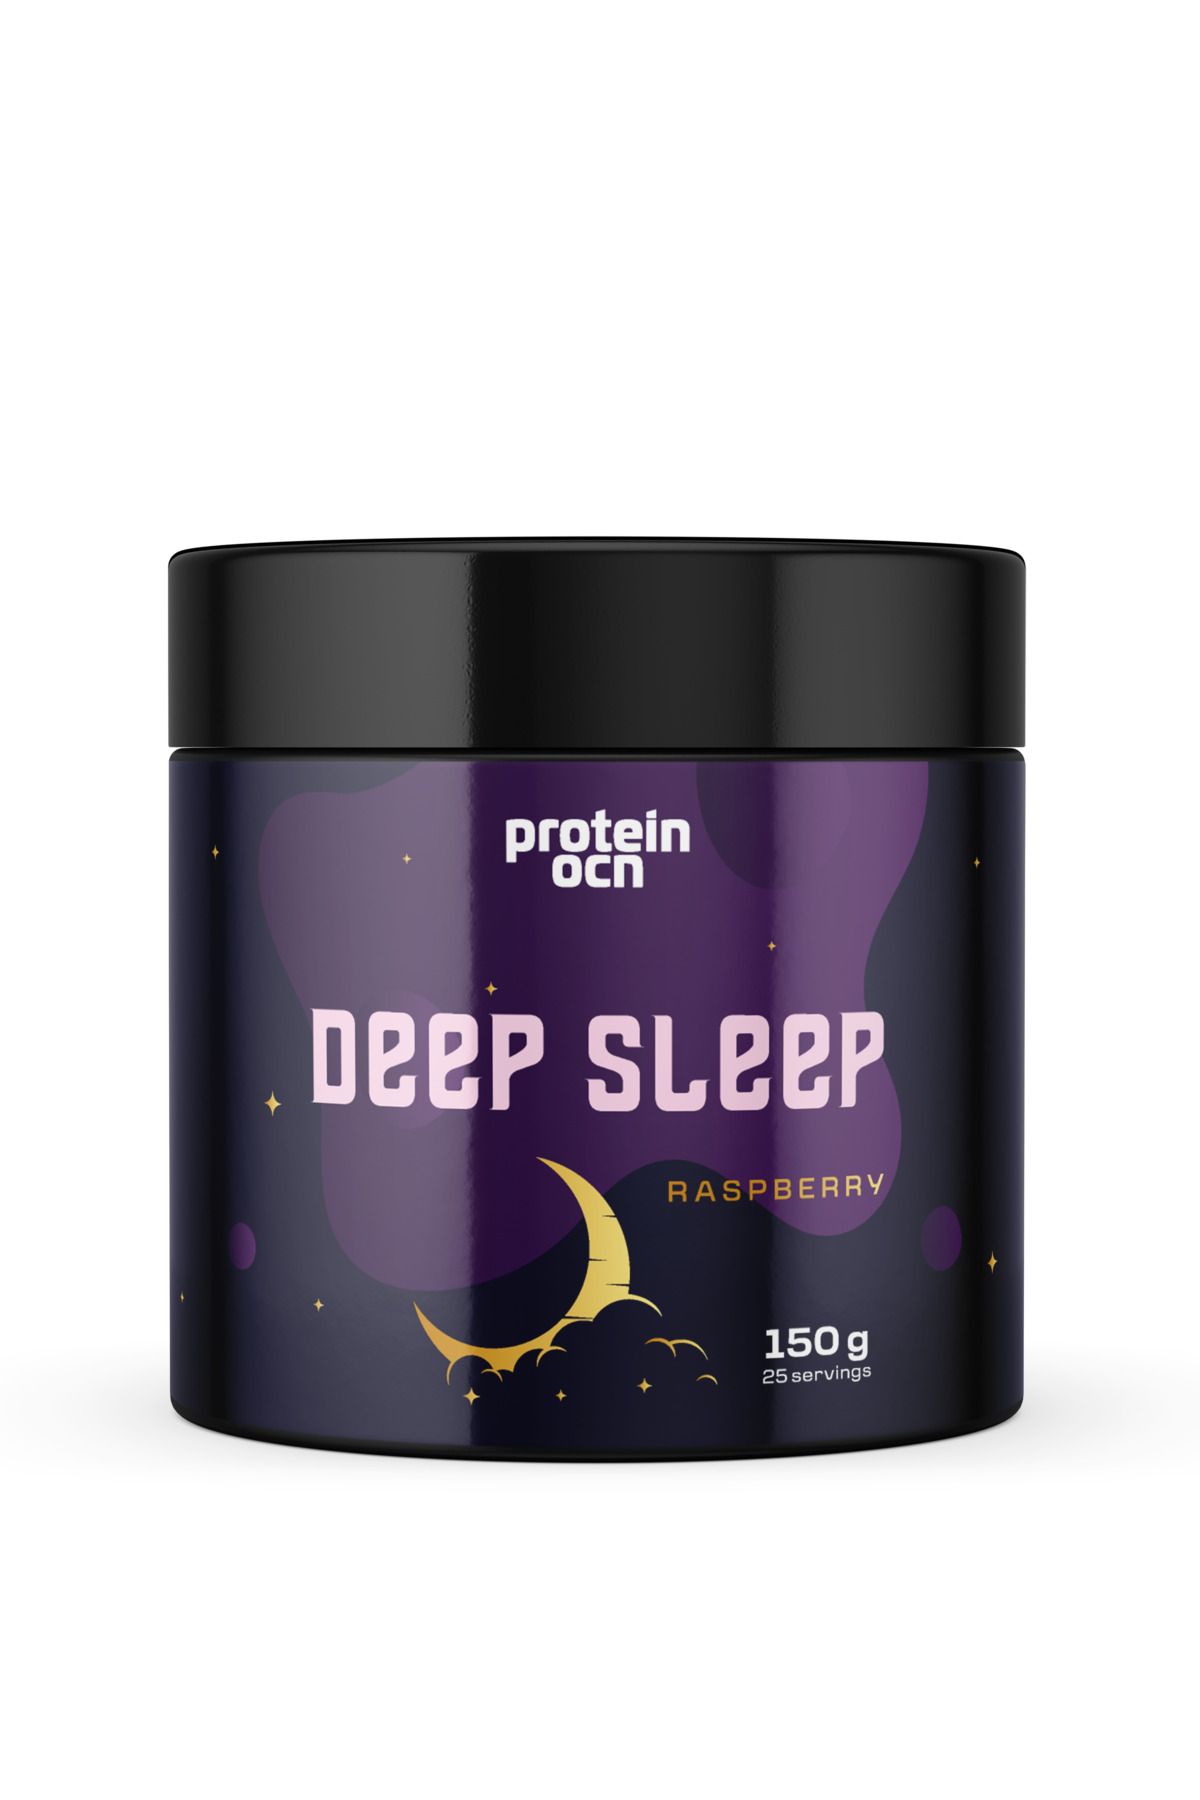 Proteinocean Deep Sleep Raspberry - Derin Uyku - 150g - 25 Servis